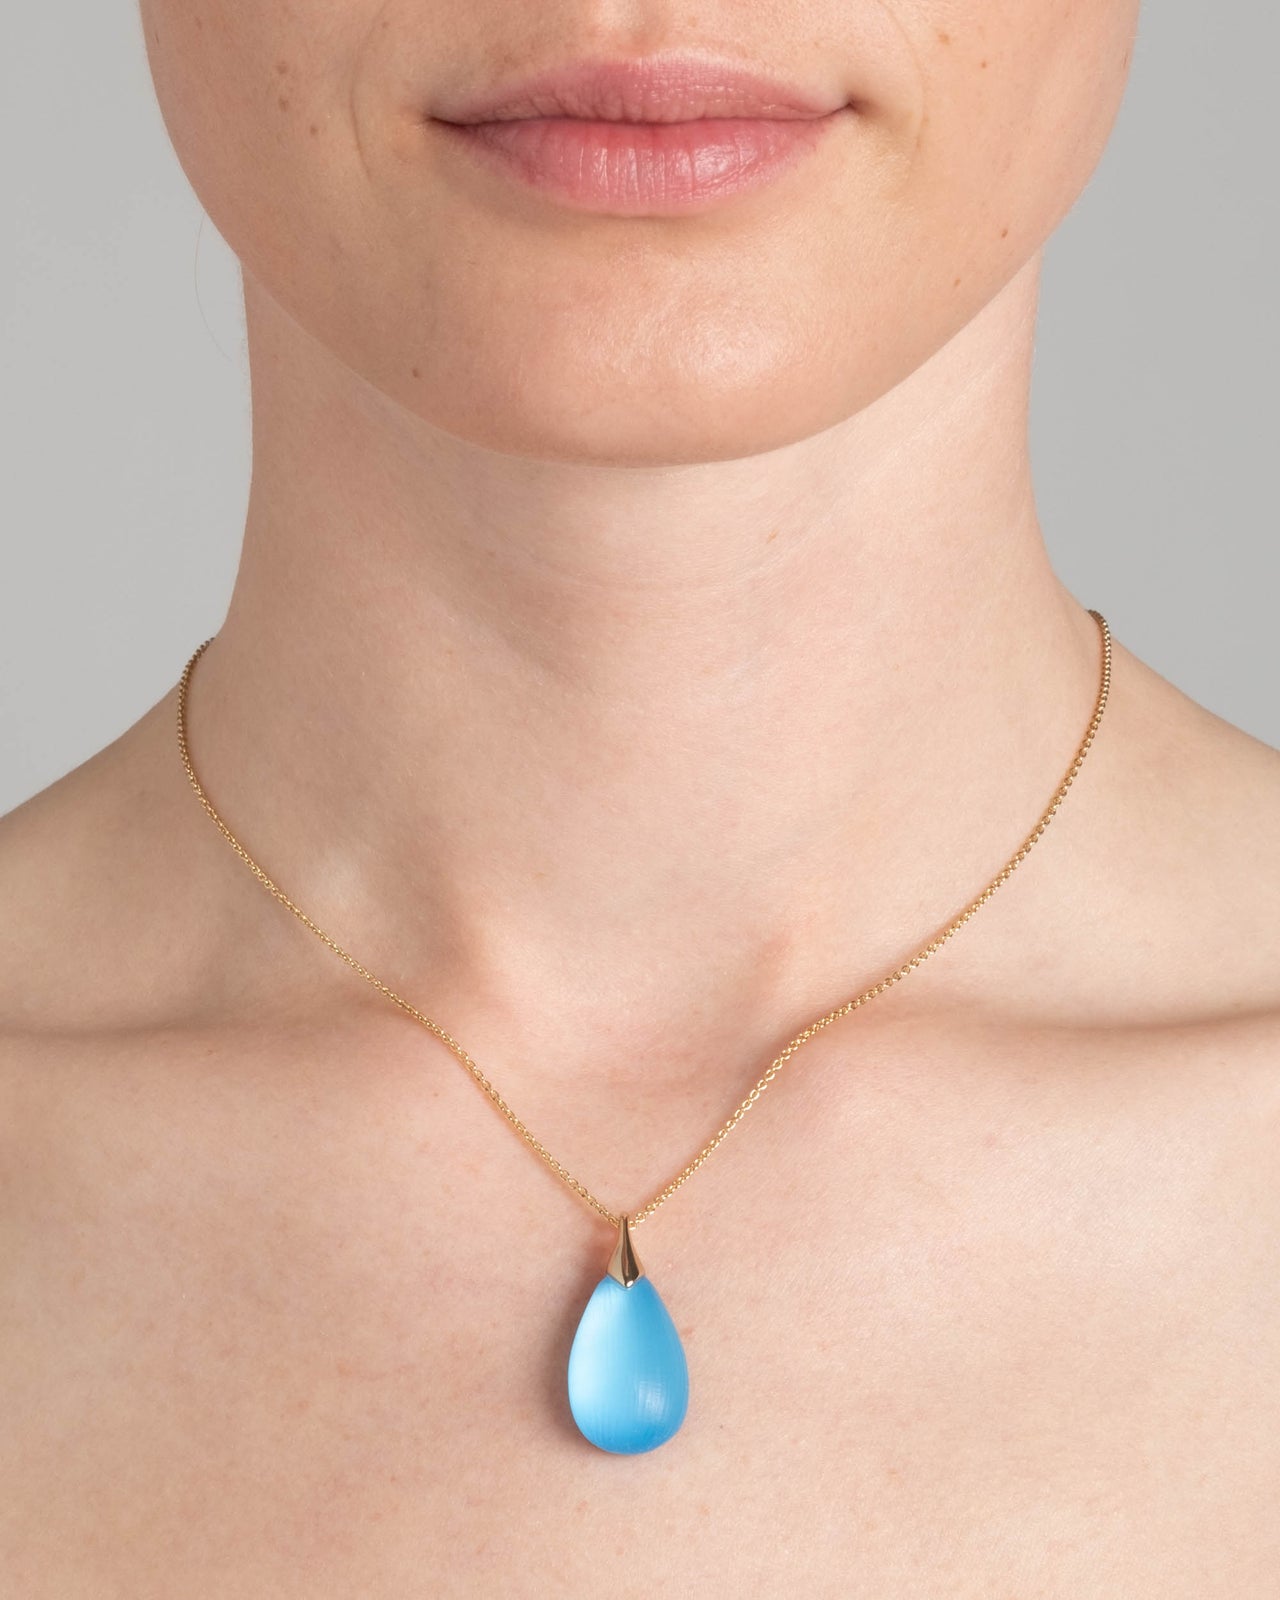 Lucite Teardrop Pendant Necklace- Neon Blue - Photo 2